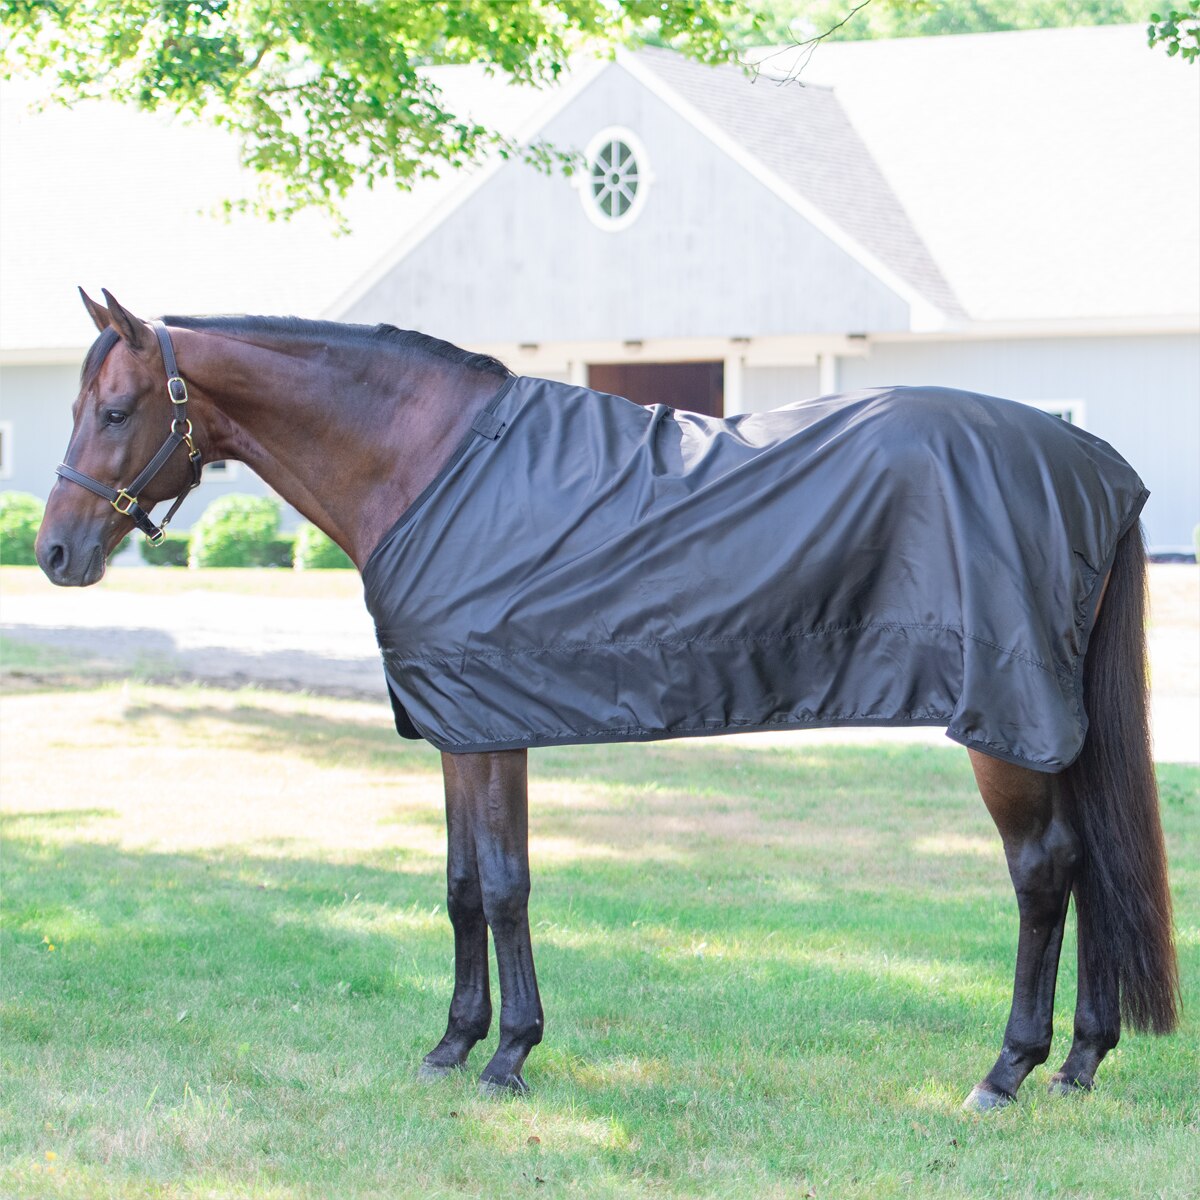 UK 46 / EU 90cm / 54 Raspberry Best On Horse Manta pesada impermeable y transpirable de invierno para caballos equitación ponis 